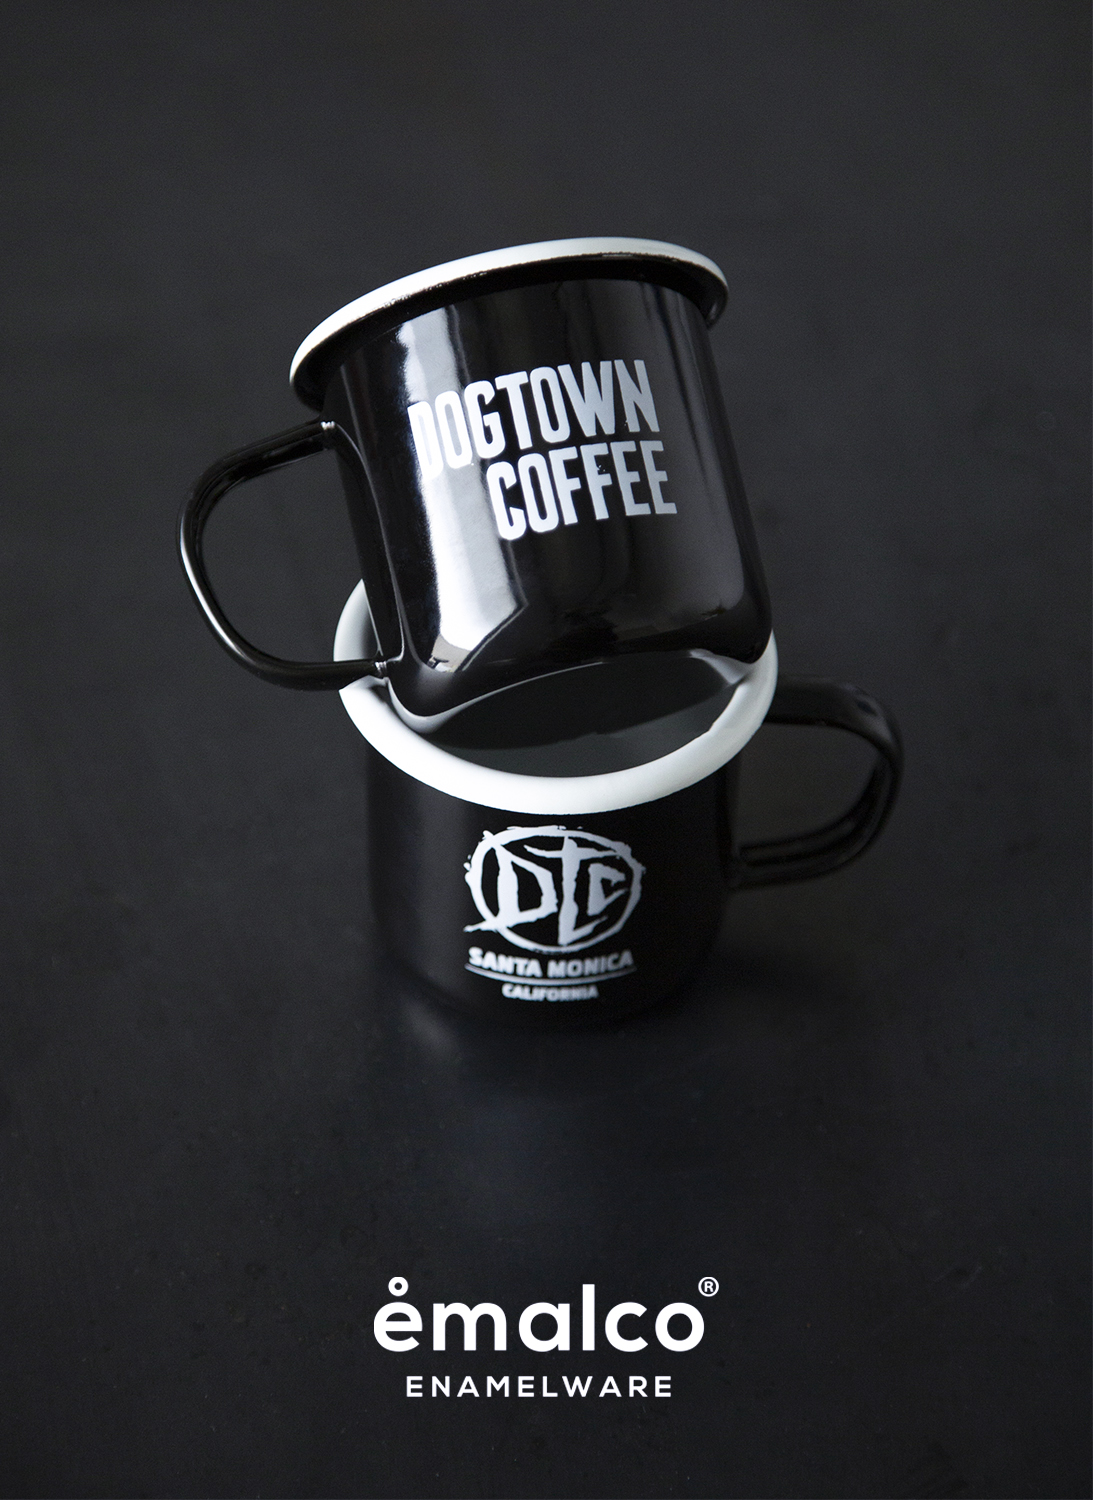 16 oz Black Potbelly Mug - Dogtown Coffee